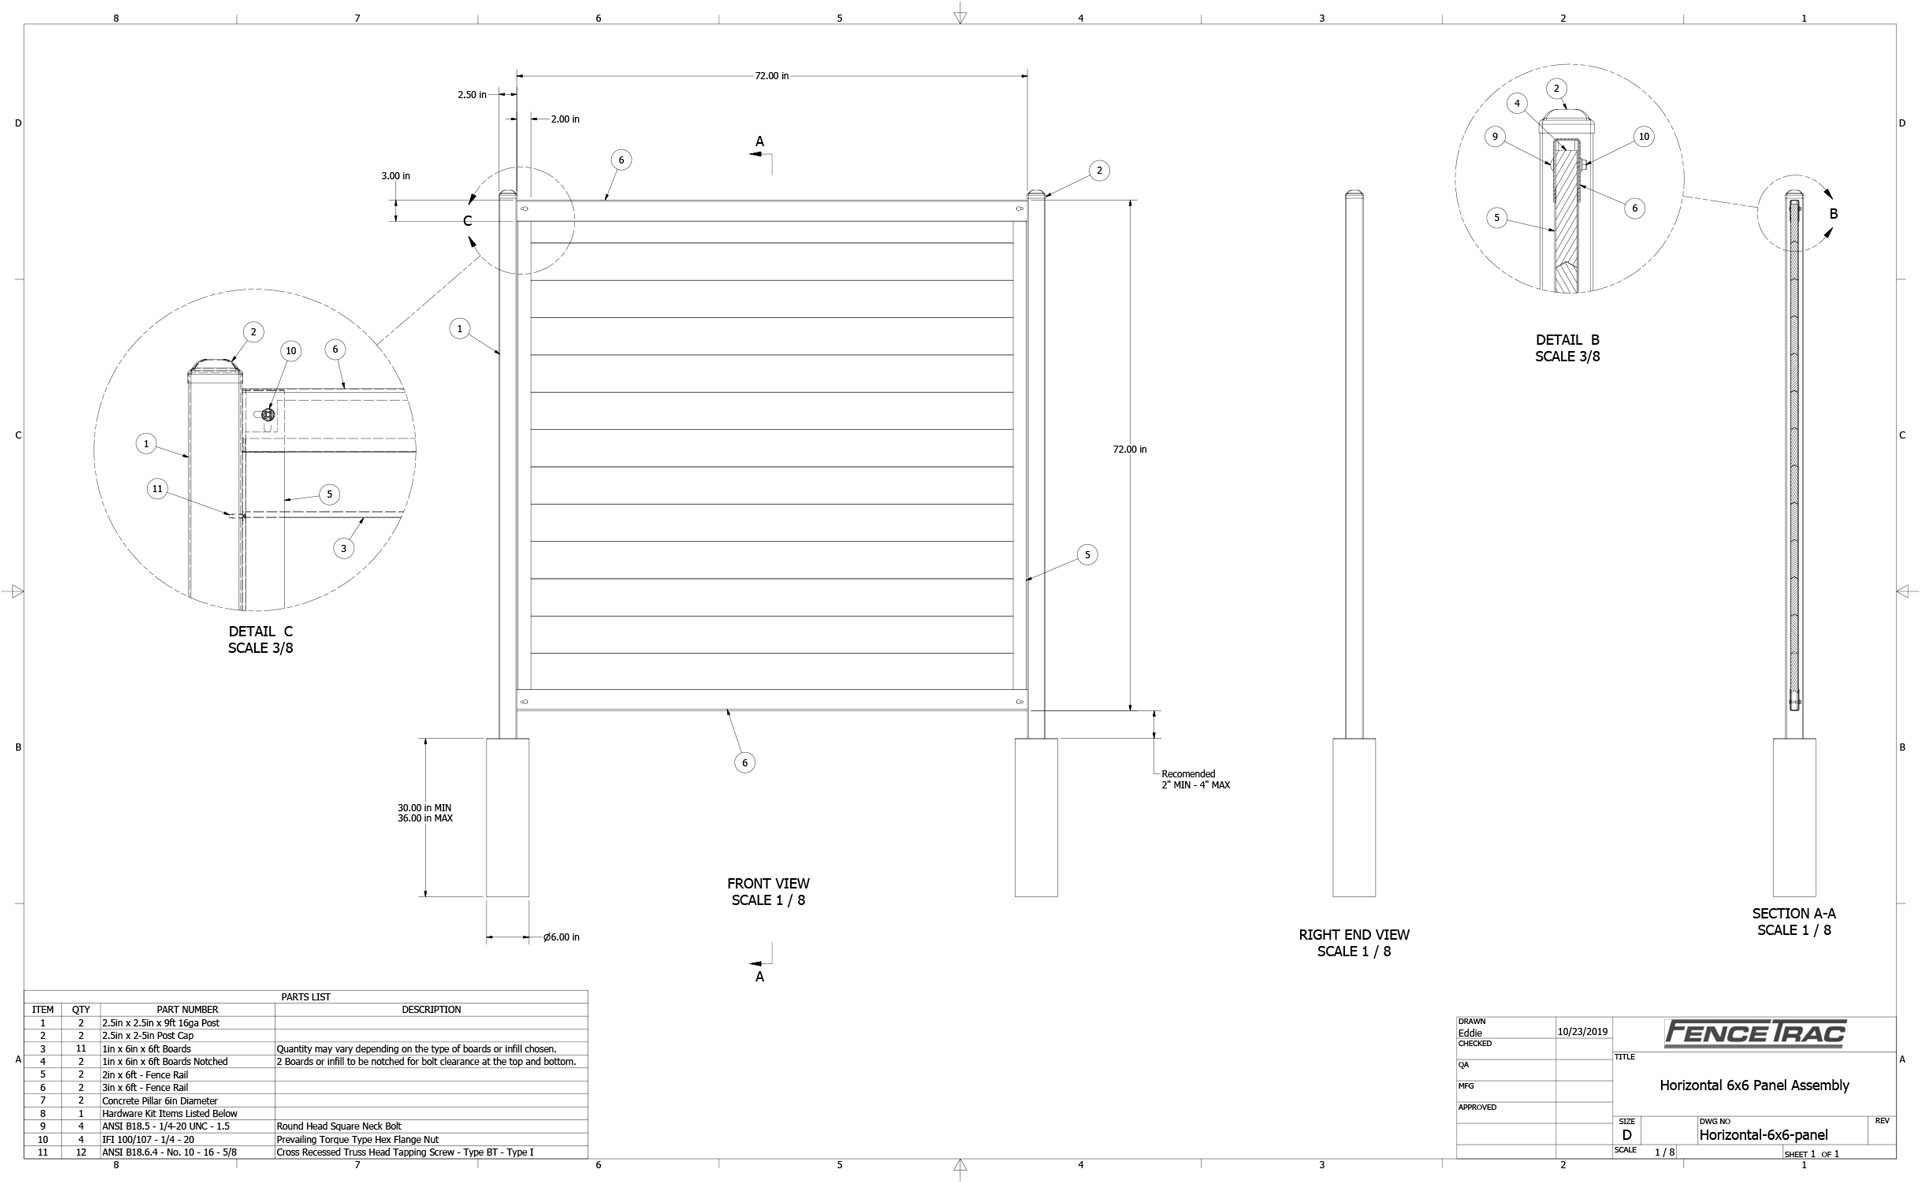 FenceTrac Drawing Horizontal 6x6 Panel